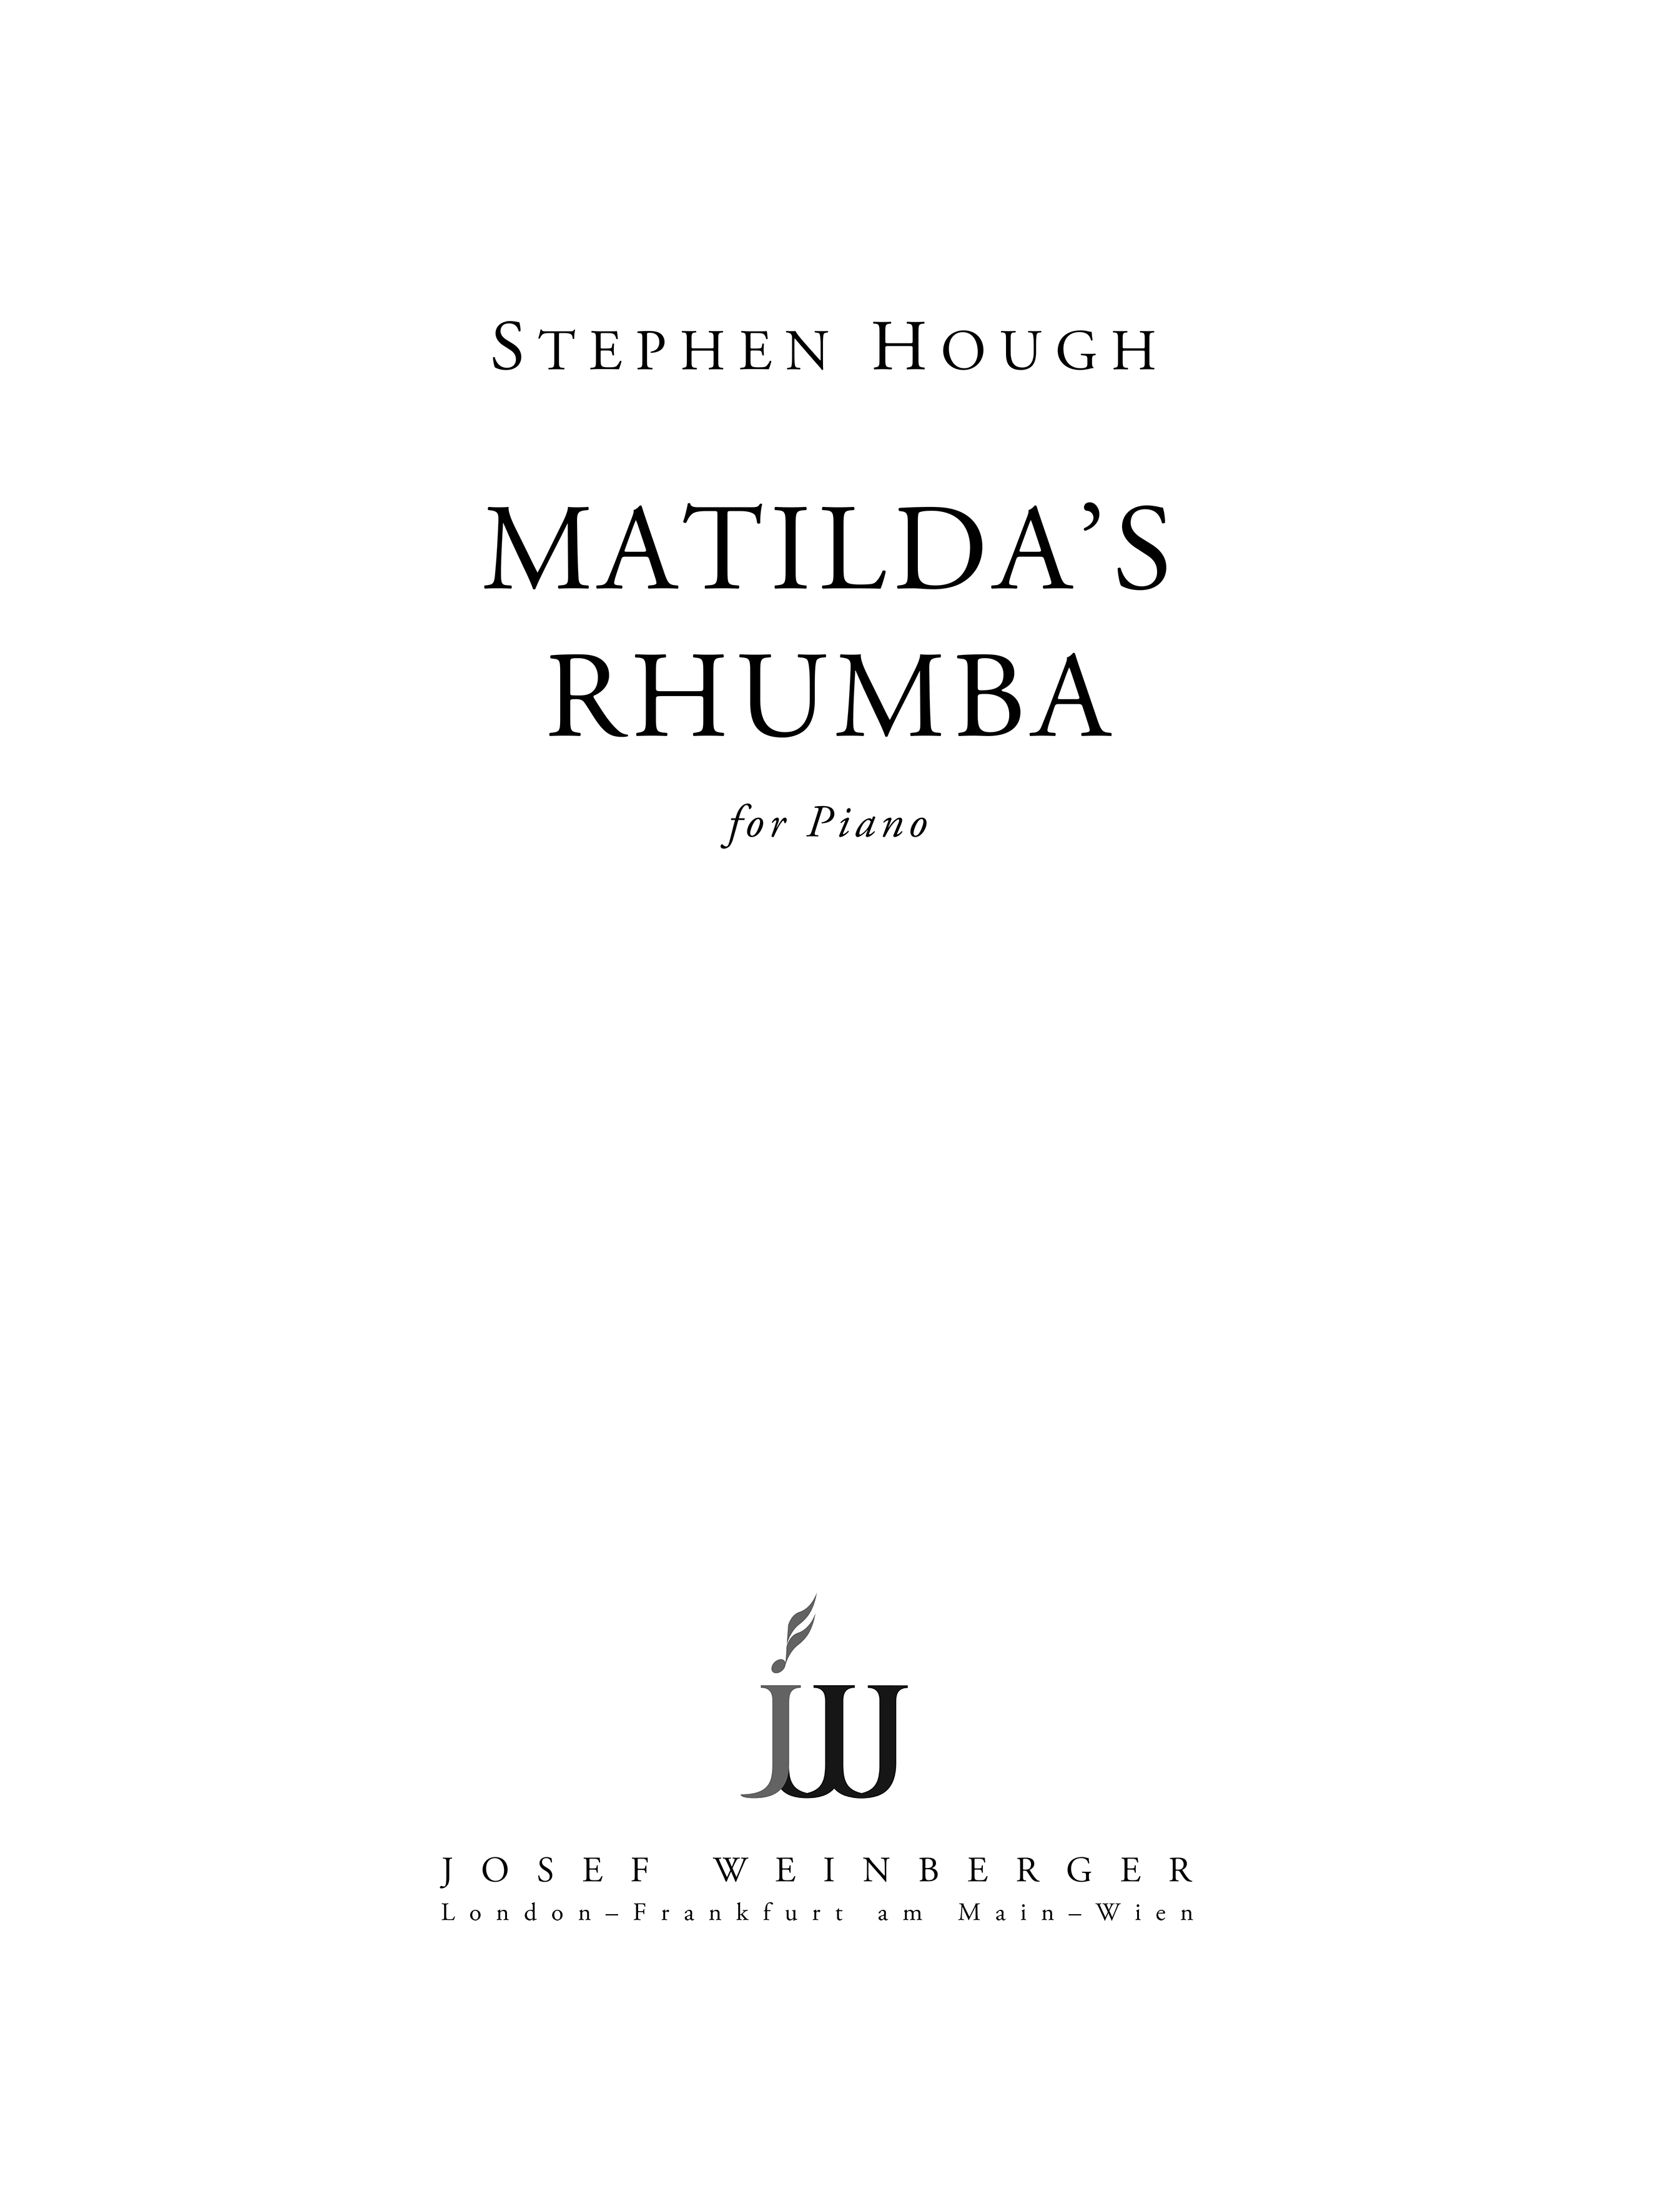 Matilda's Rhumba (HOUGH STEPHEN)